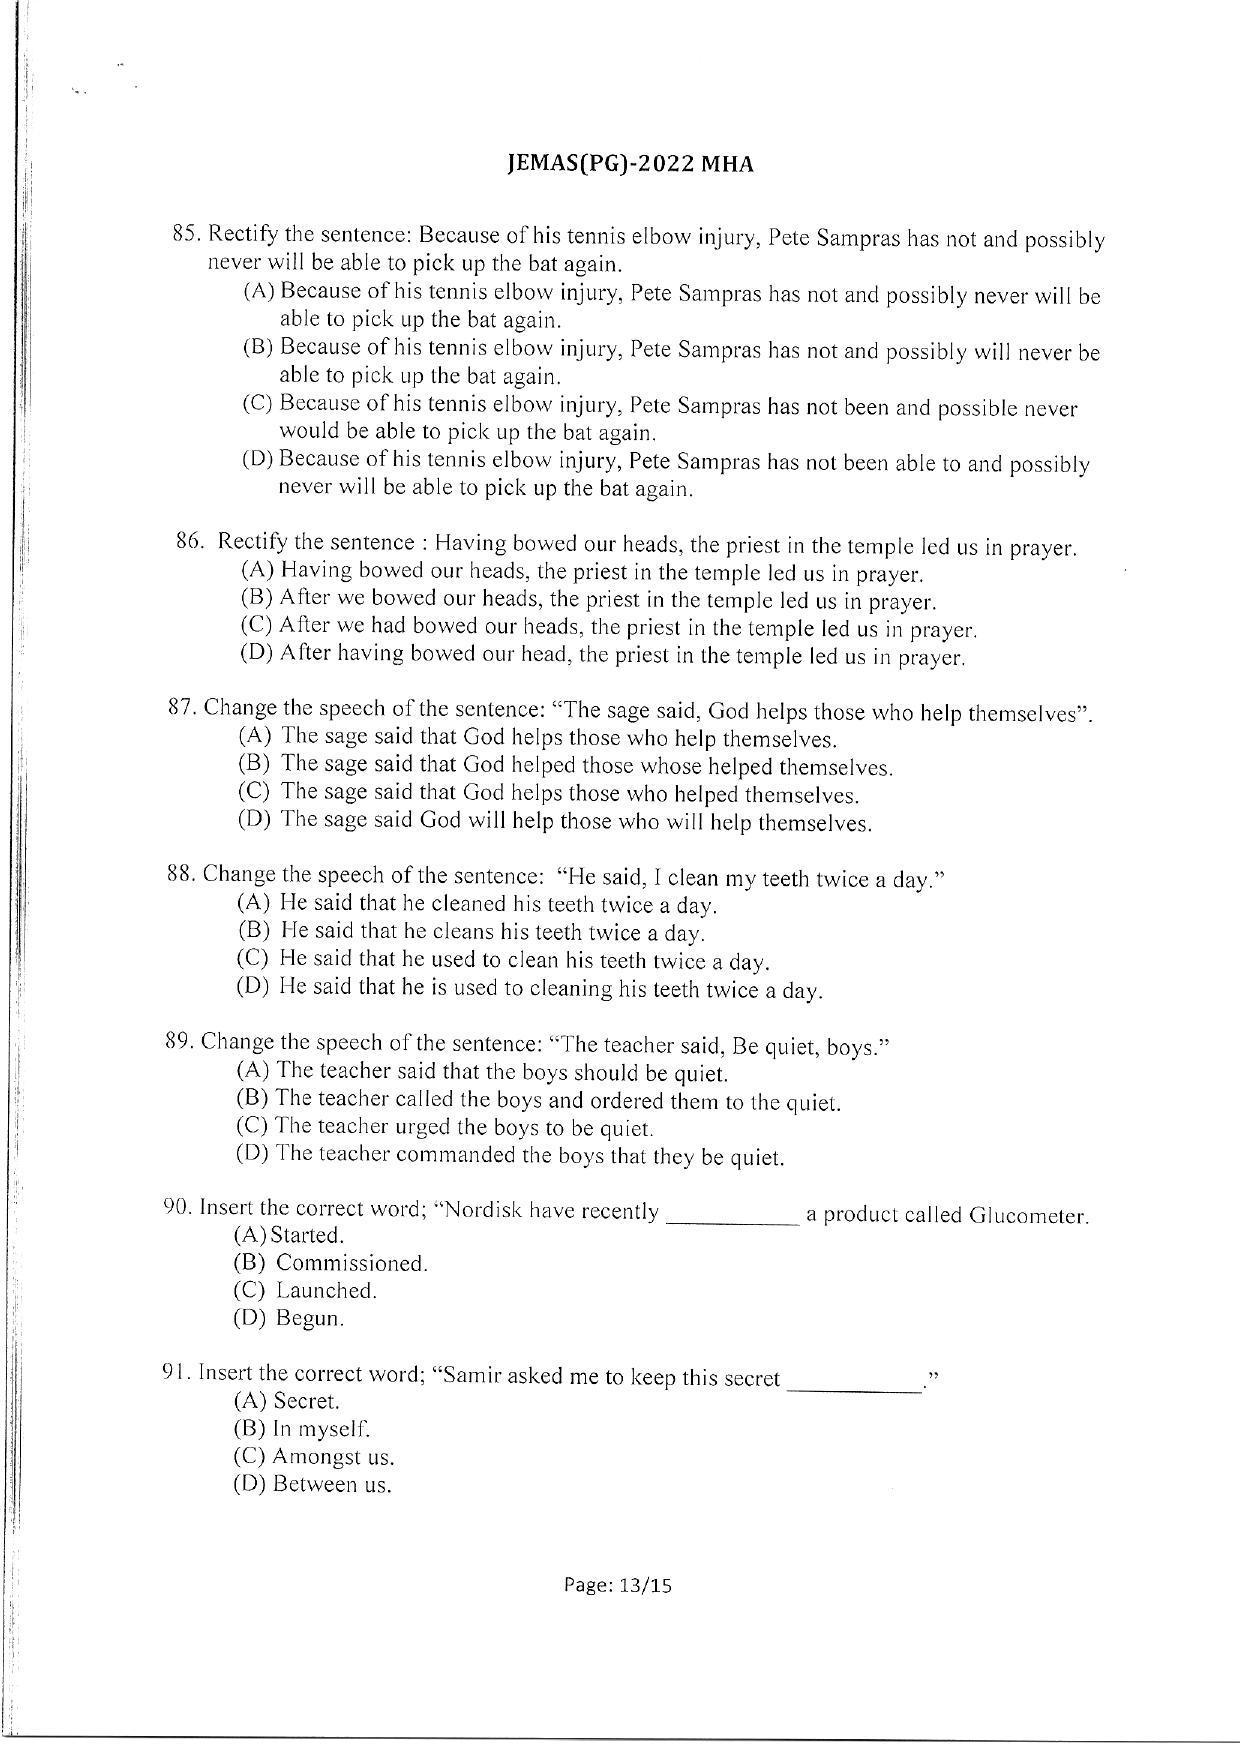 WBJEEB JEMAS (PG) 2022 MHA Question Paper - Page 15